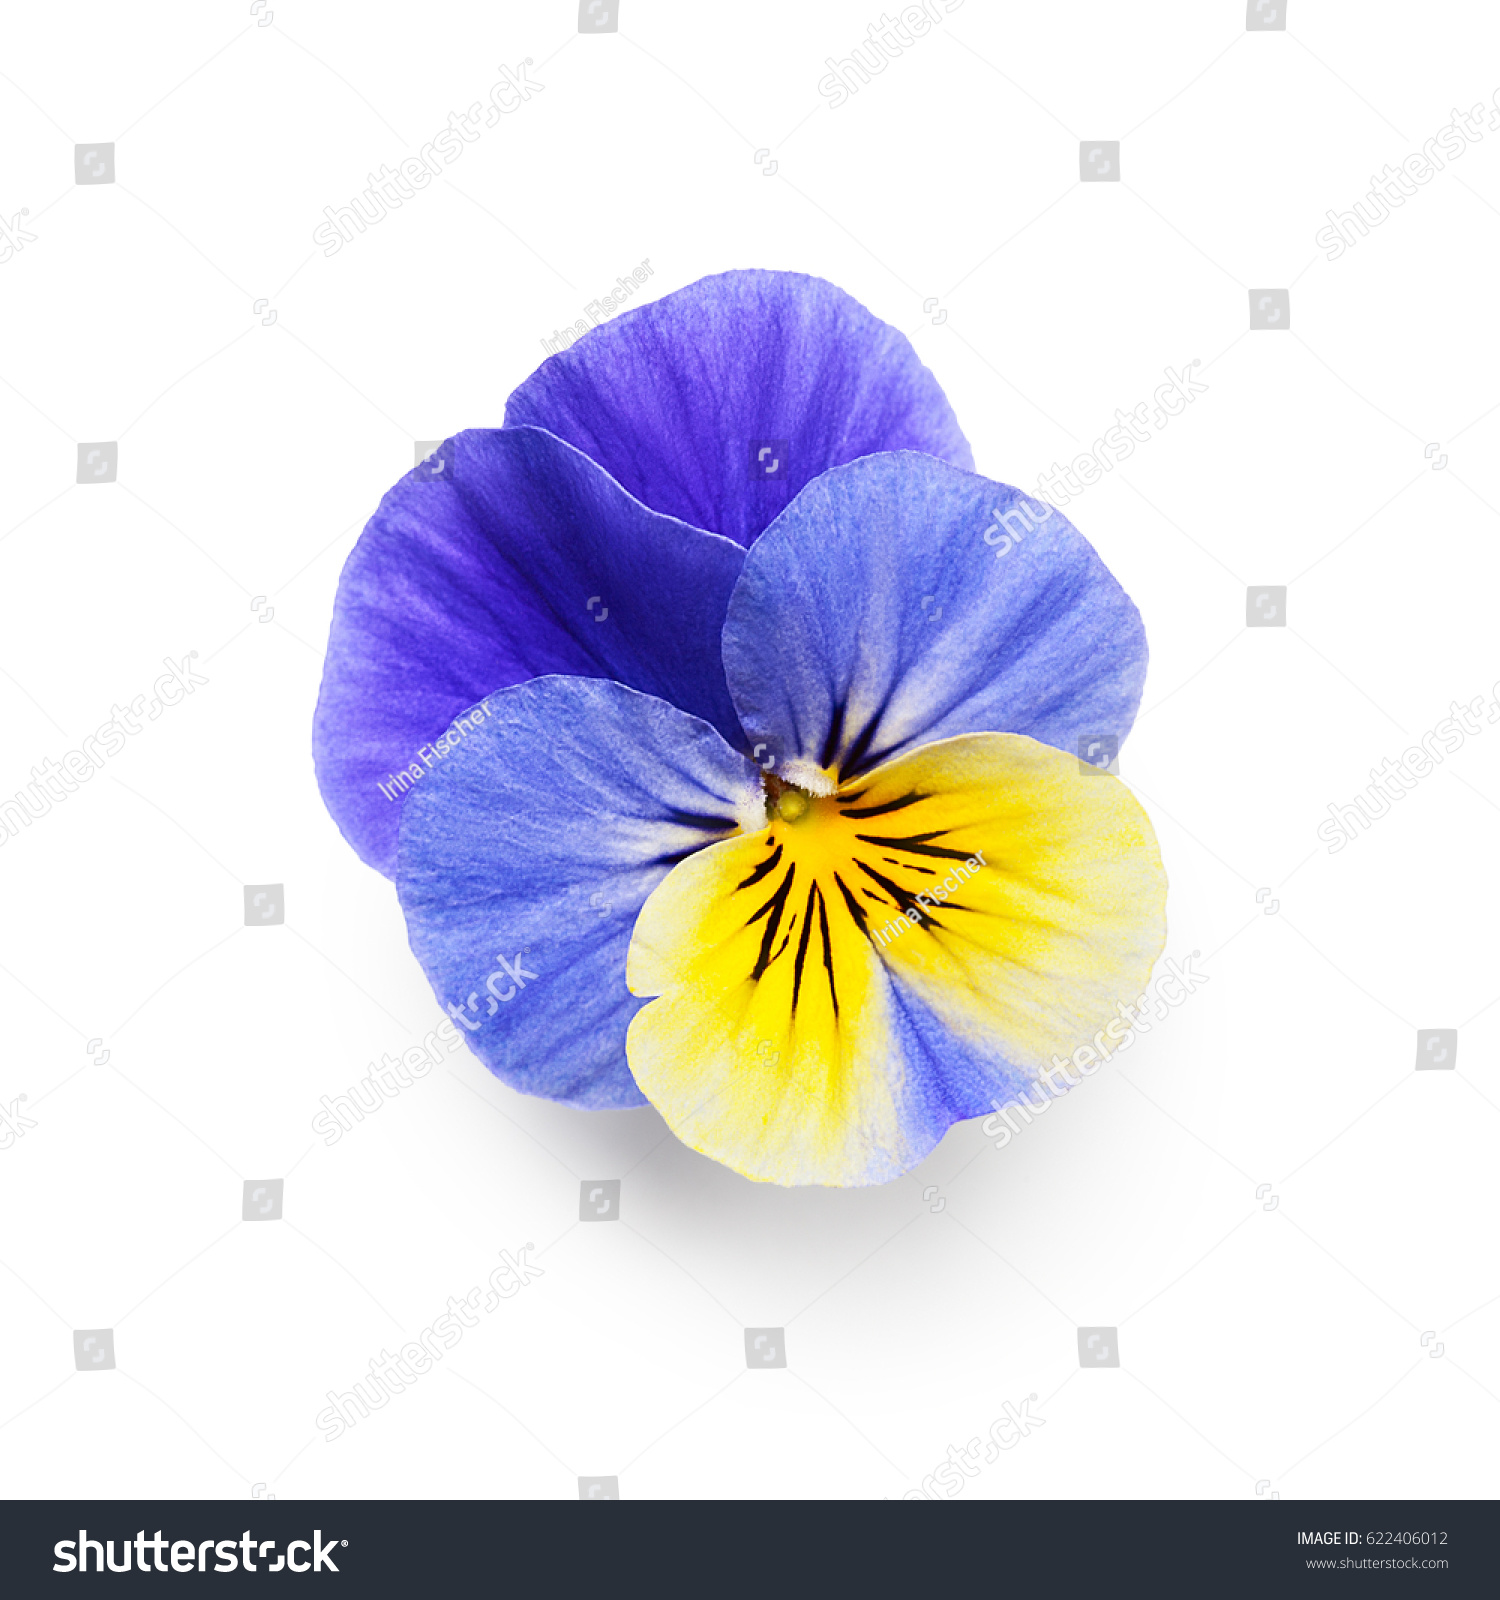 Pansy Flower Isolated On White Background Stock Photo & Image ...